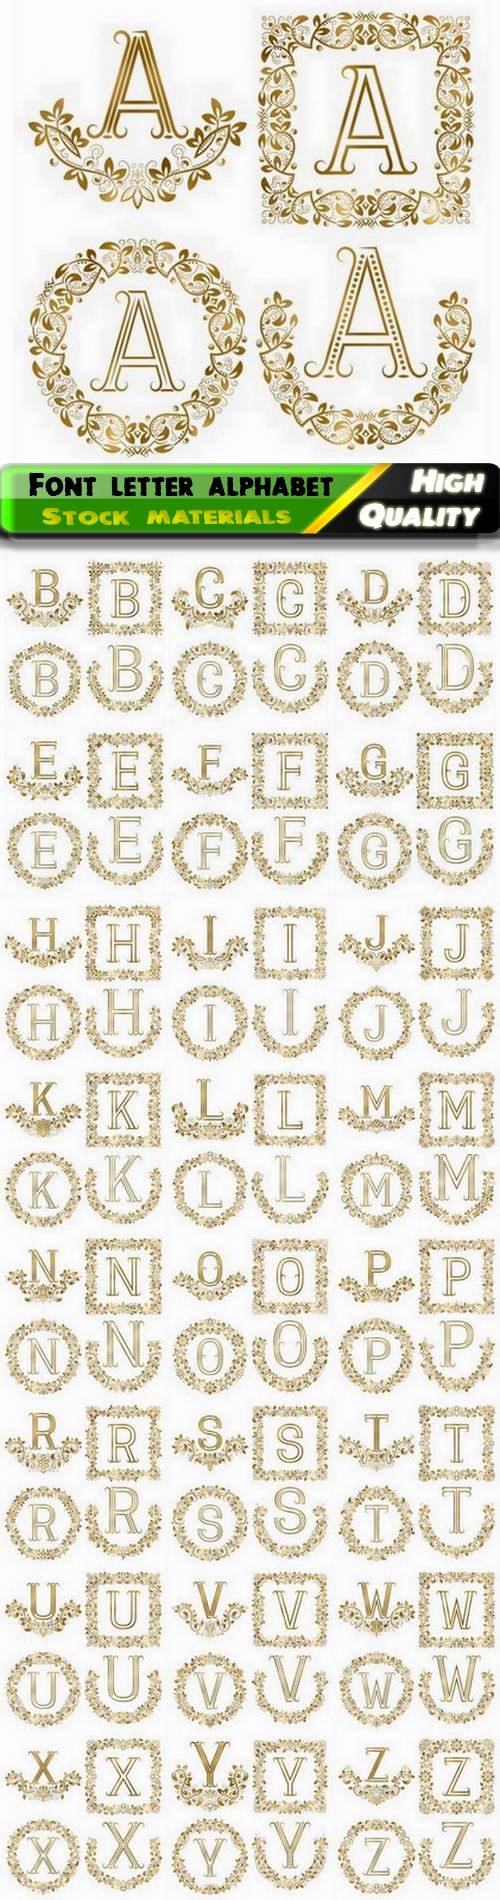 Font letter alphabet and gold monogram - 25 Eps